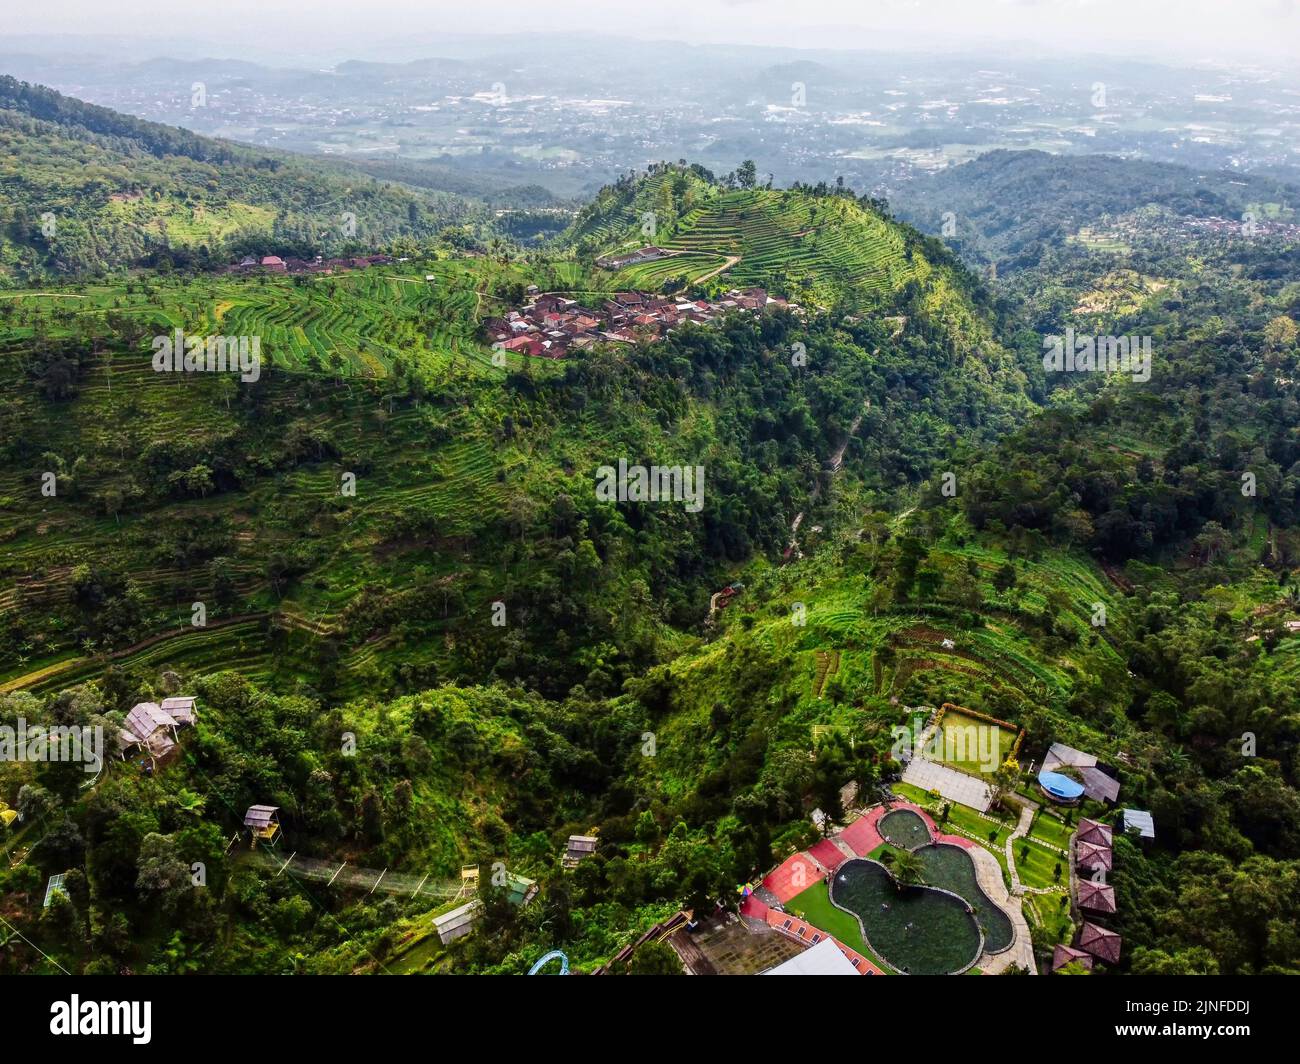 Sido Mukti hills  Taken @Sido Mukti, Semarang, Central Java, Indonesia Stock Photo